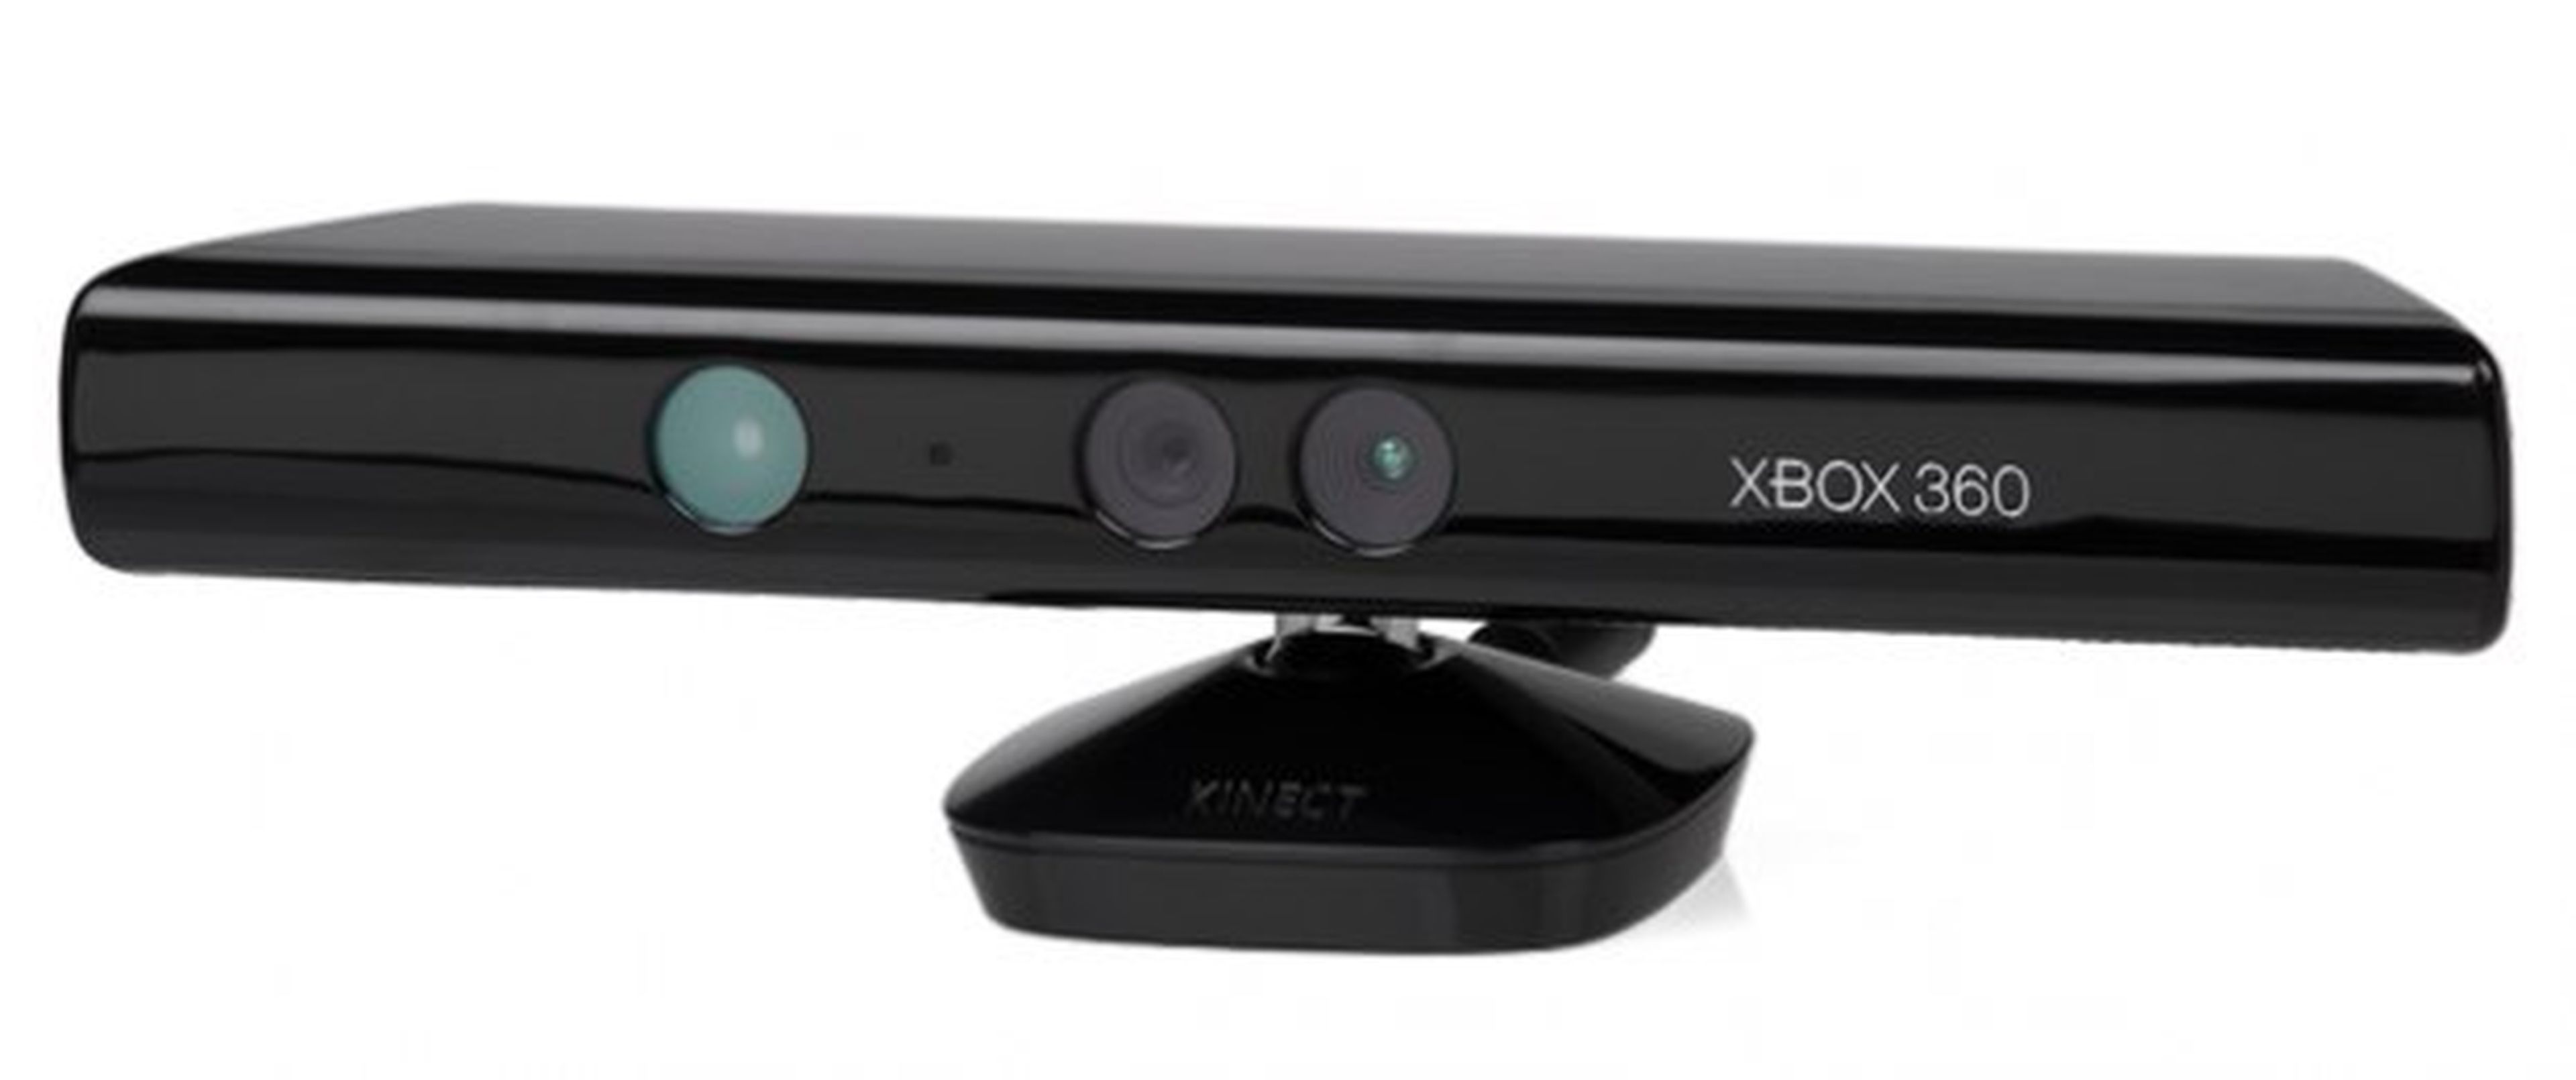 Contraseñas biométricas. Kinect